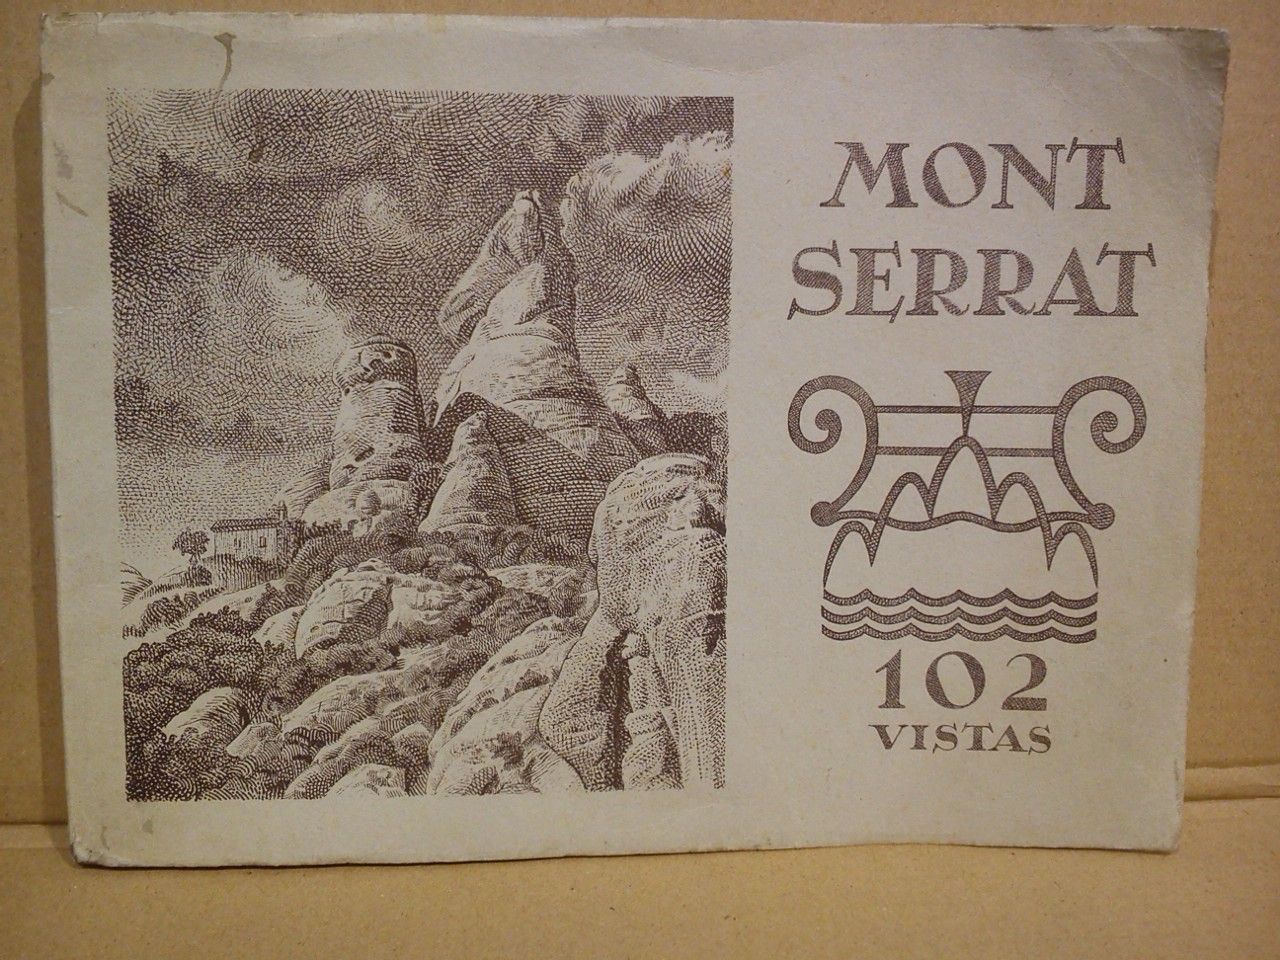 [ALBUM DE LAMINAS FOTOGRAFICAS] - Mont-Serrat. 102 vistas